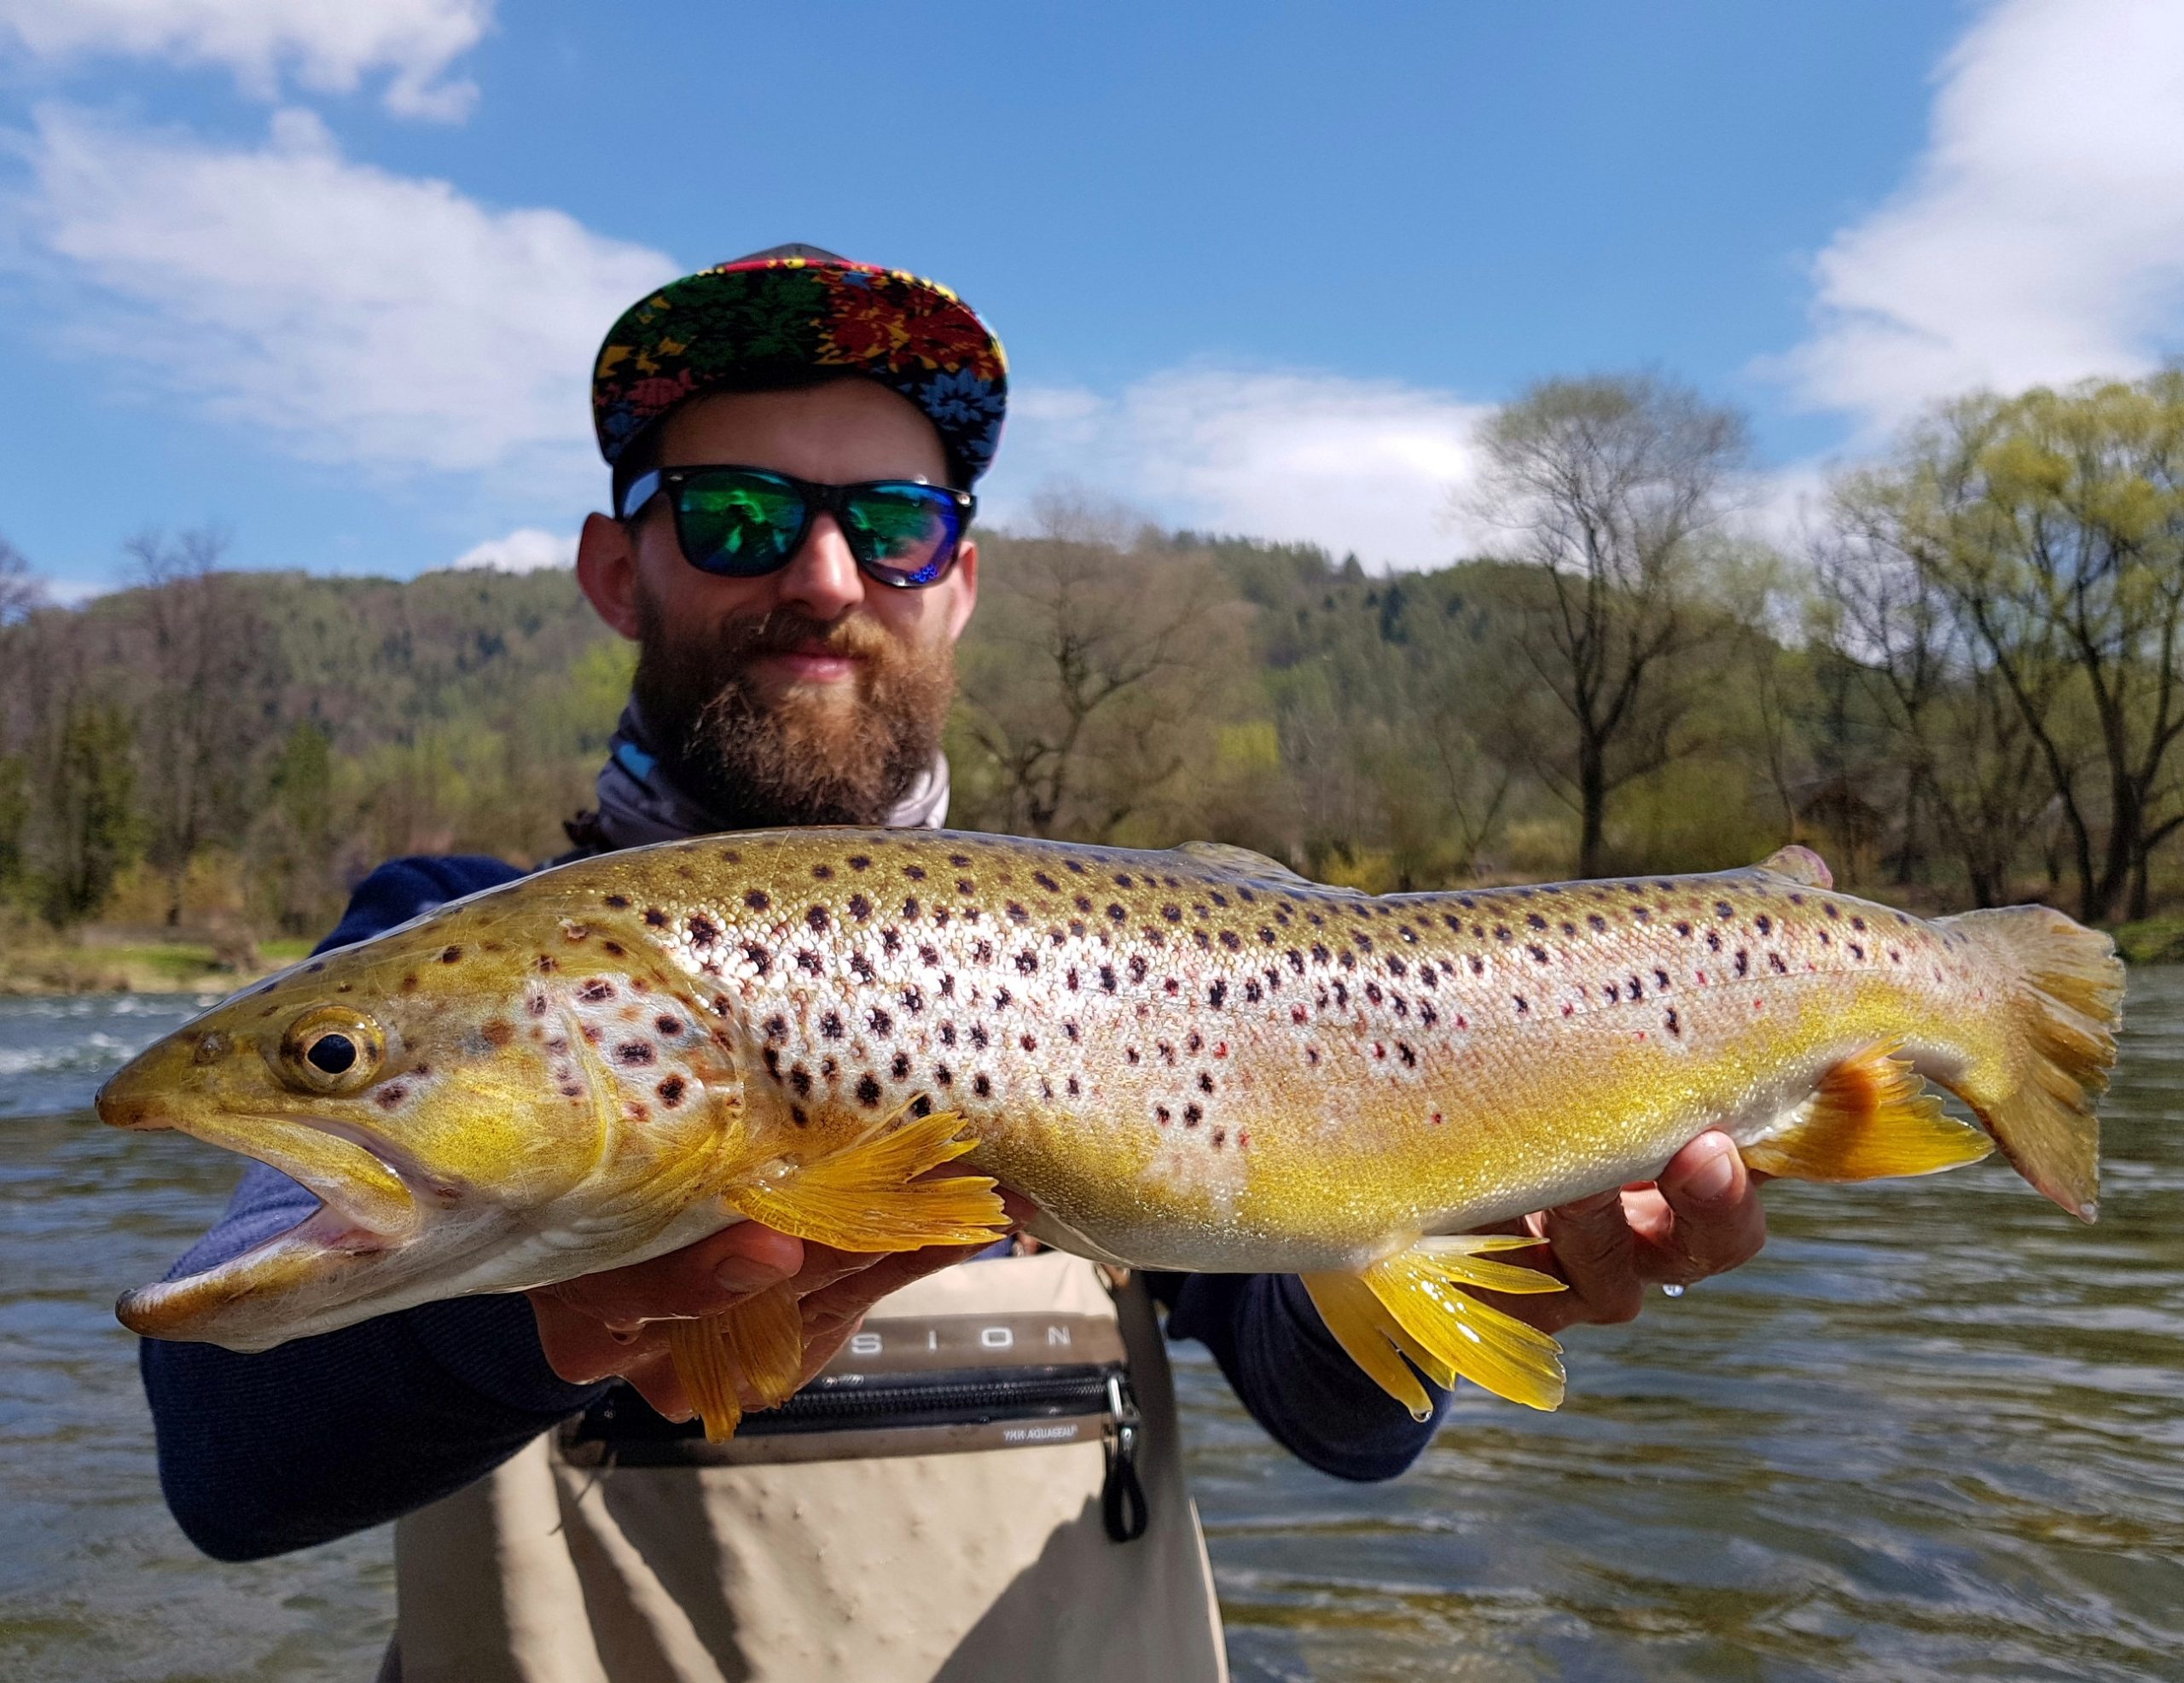 Brown trout similar we catch in Bosnia Rivers - like Ribnik